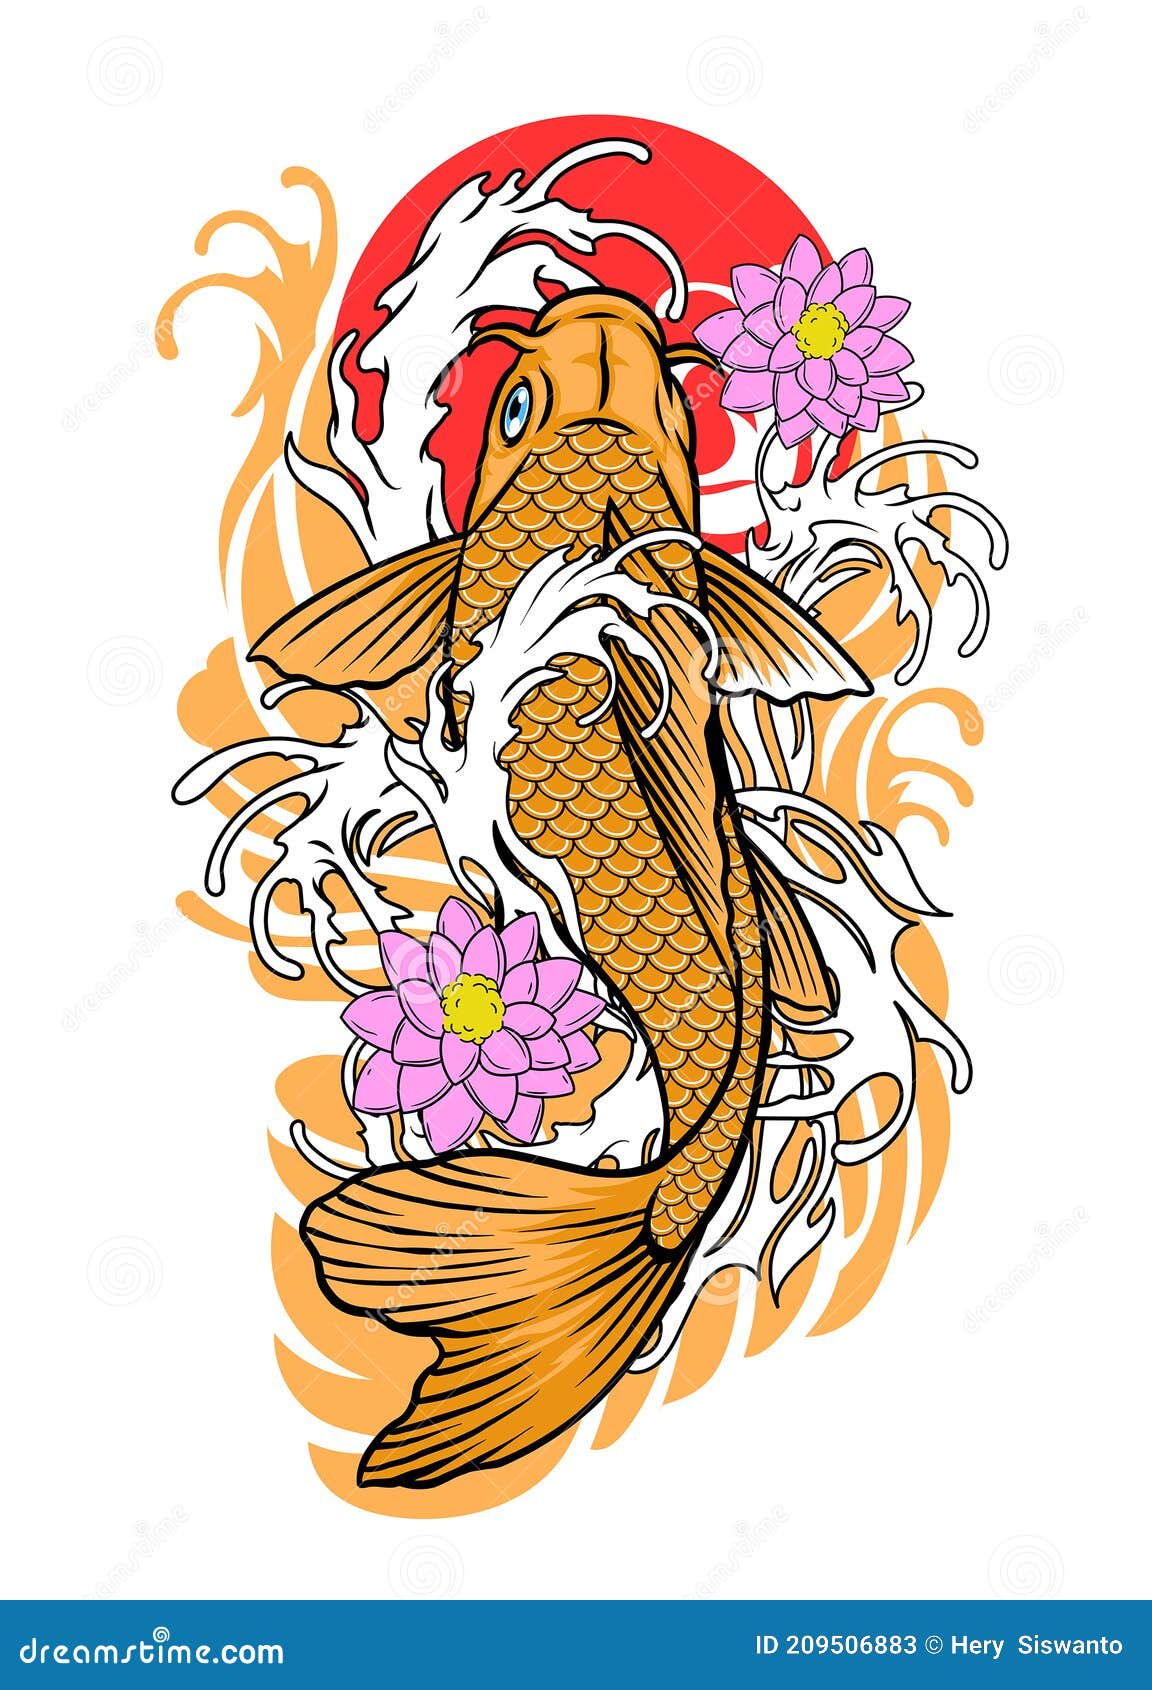 Koi Fish Tattoo Design in Vintage Look Stock Vector - Illustration of culture, animal: 209506883